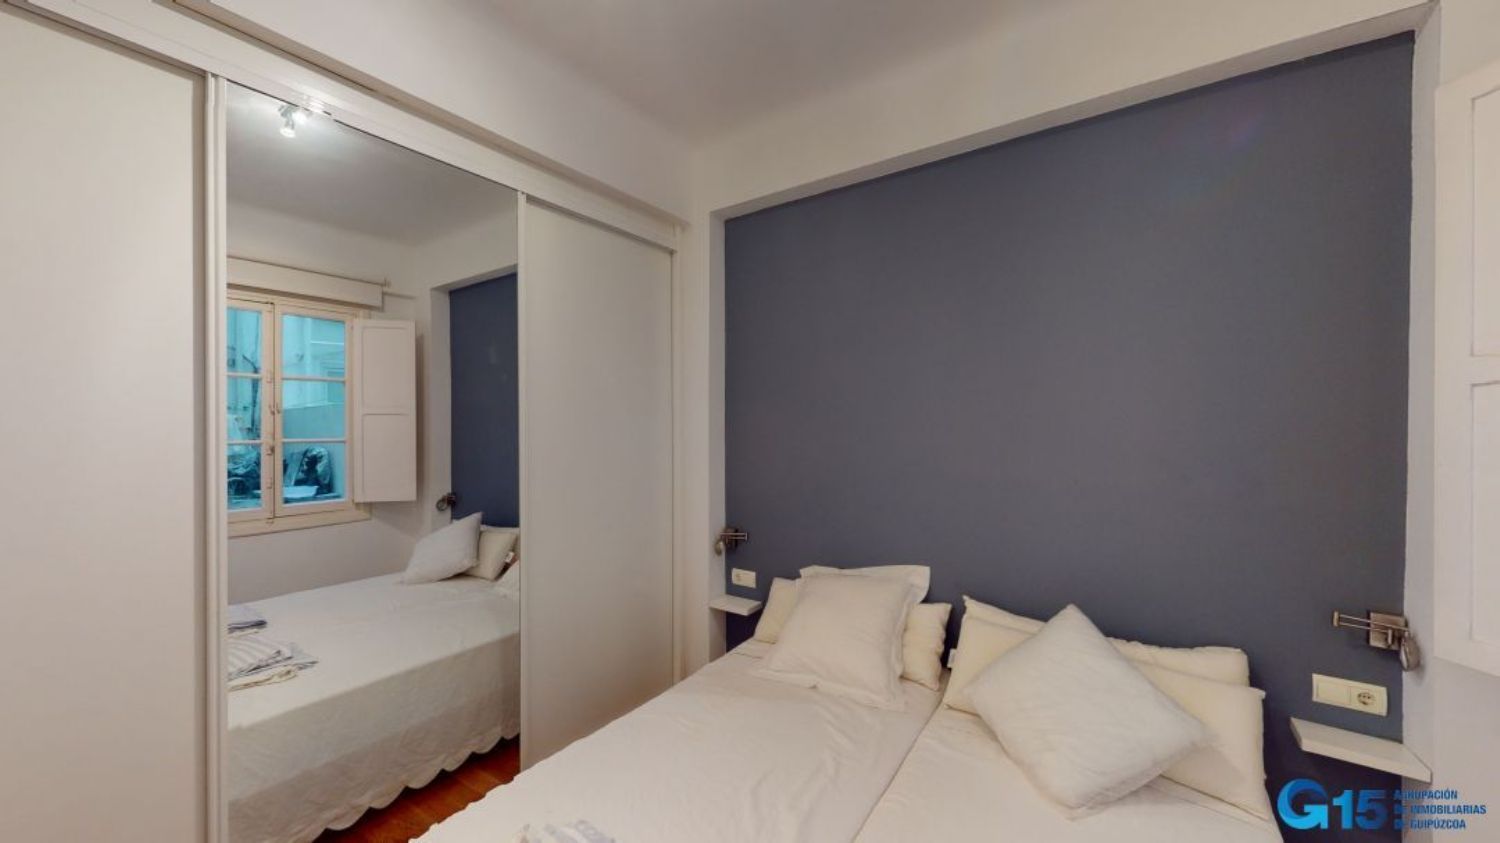 Apartment for sale on the seafront in Zurriola Hiribidea, in Donostia-San Sebastian